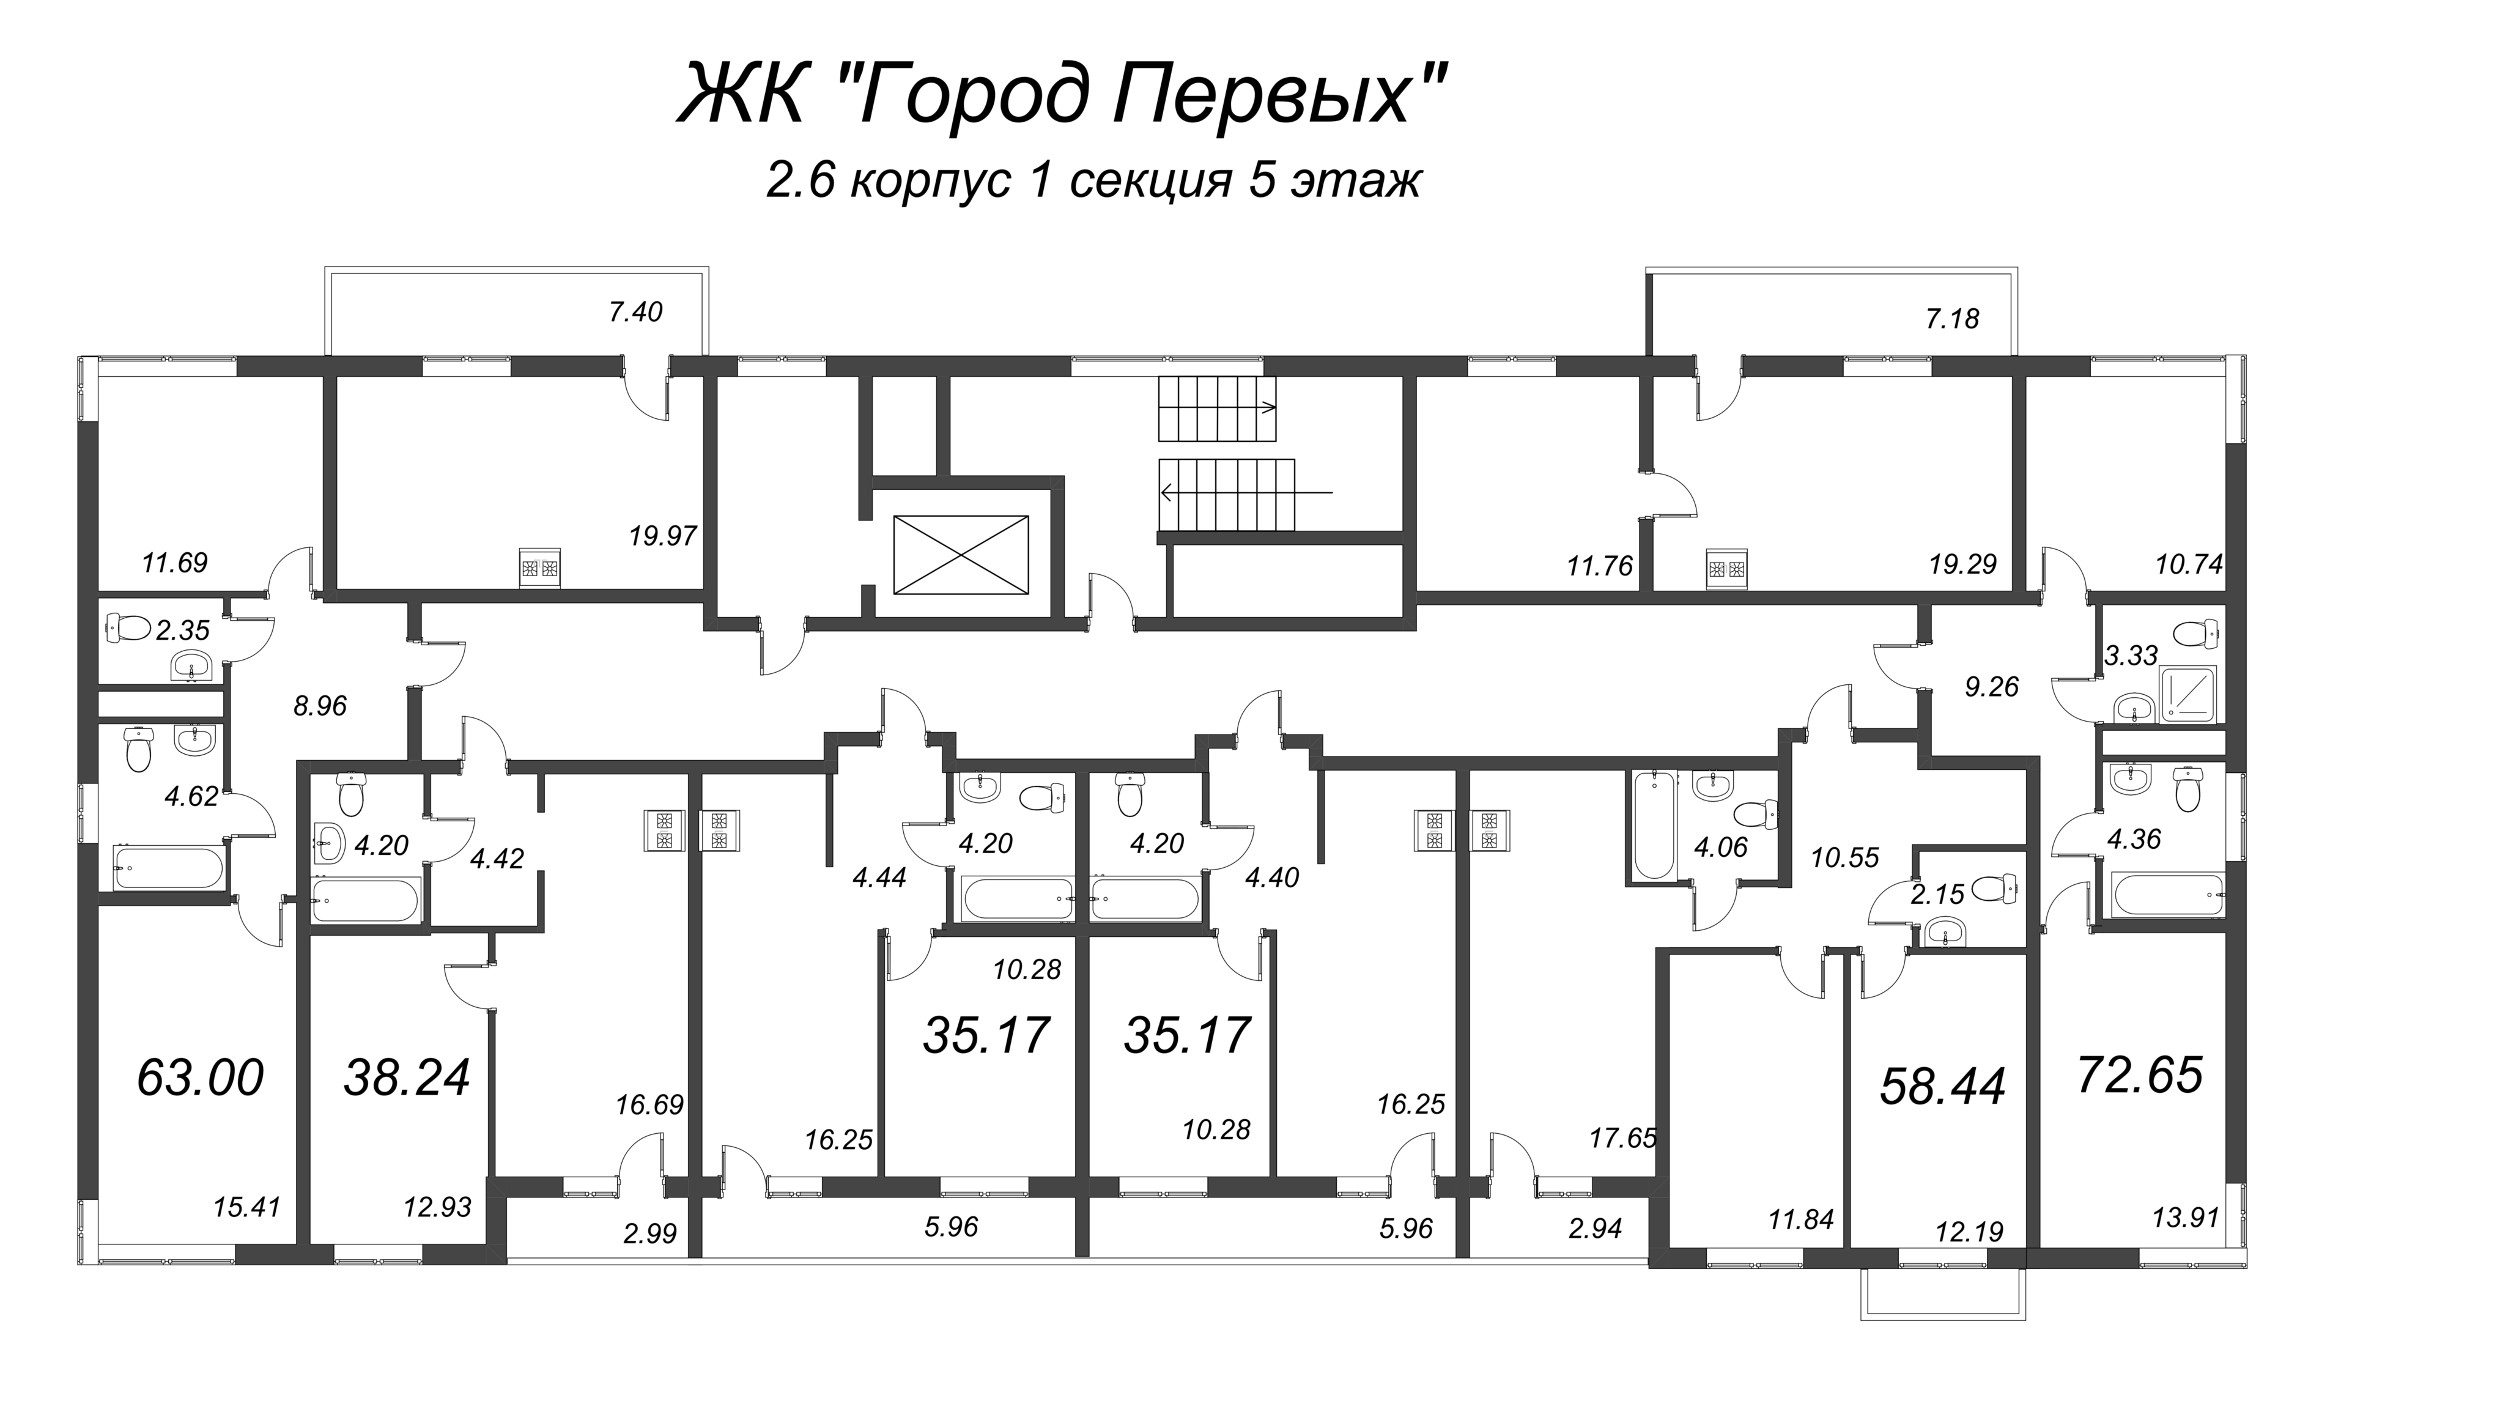 3-комнатная (Евро) квартира, 58.44 м² - планировка этажа